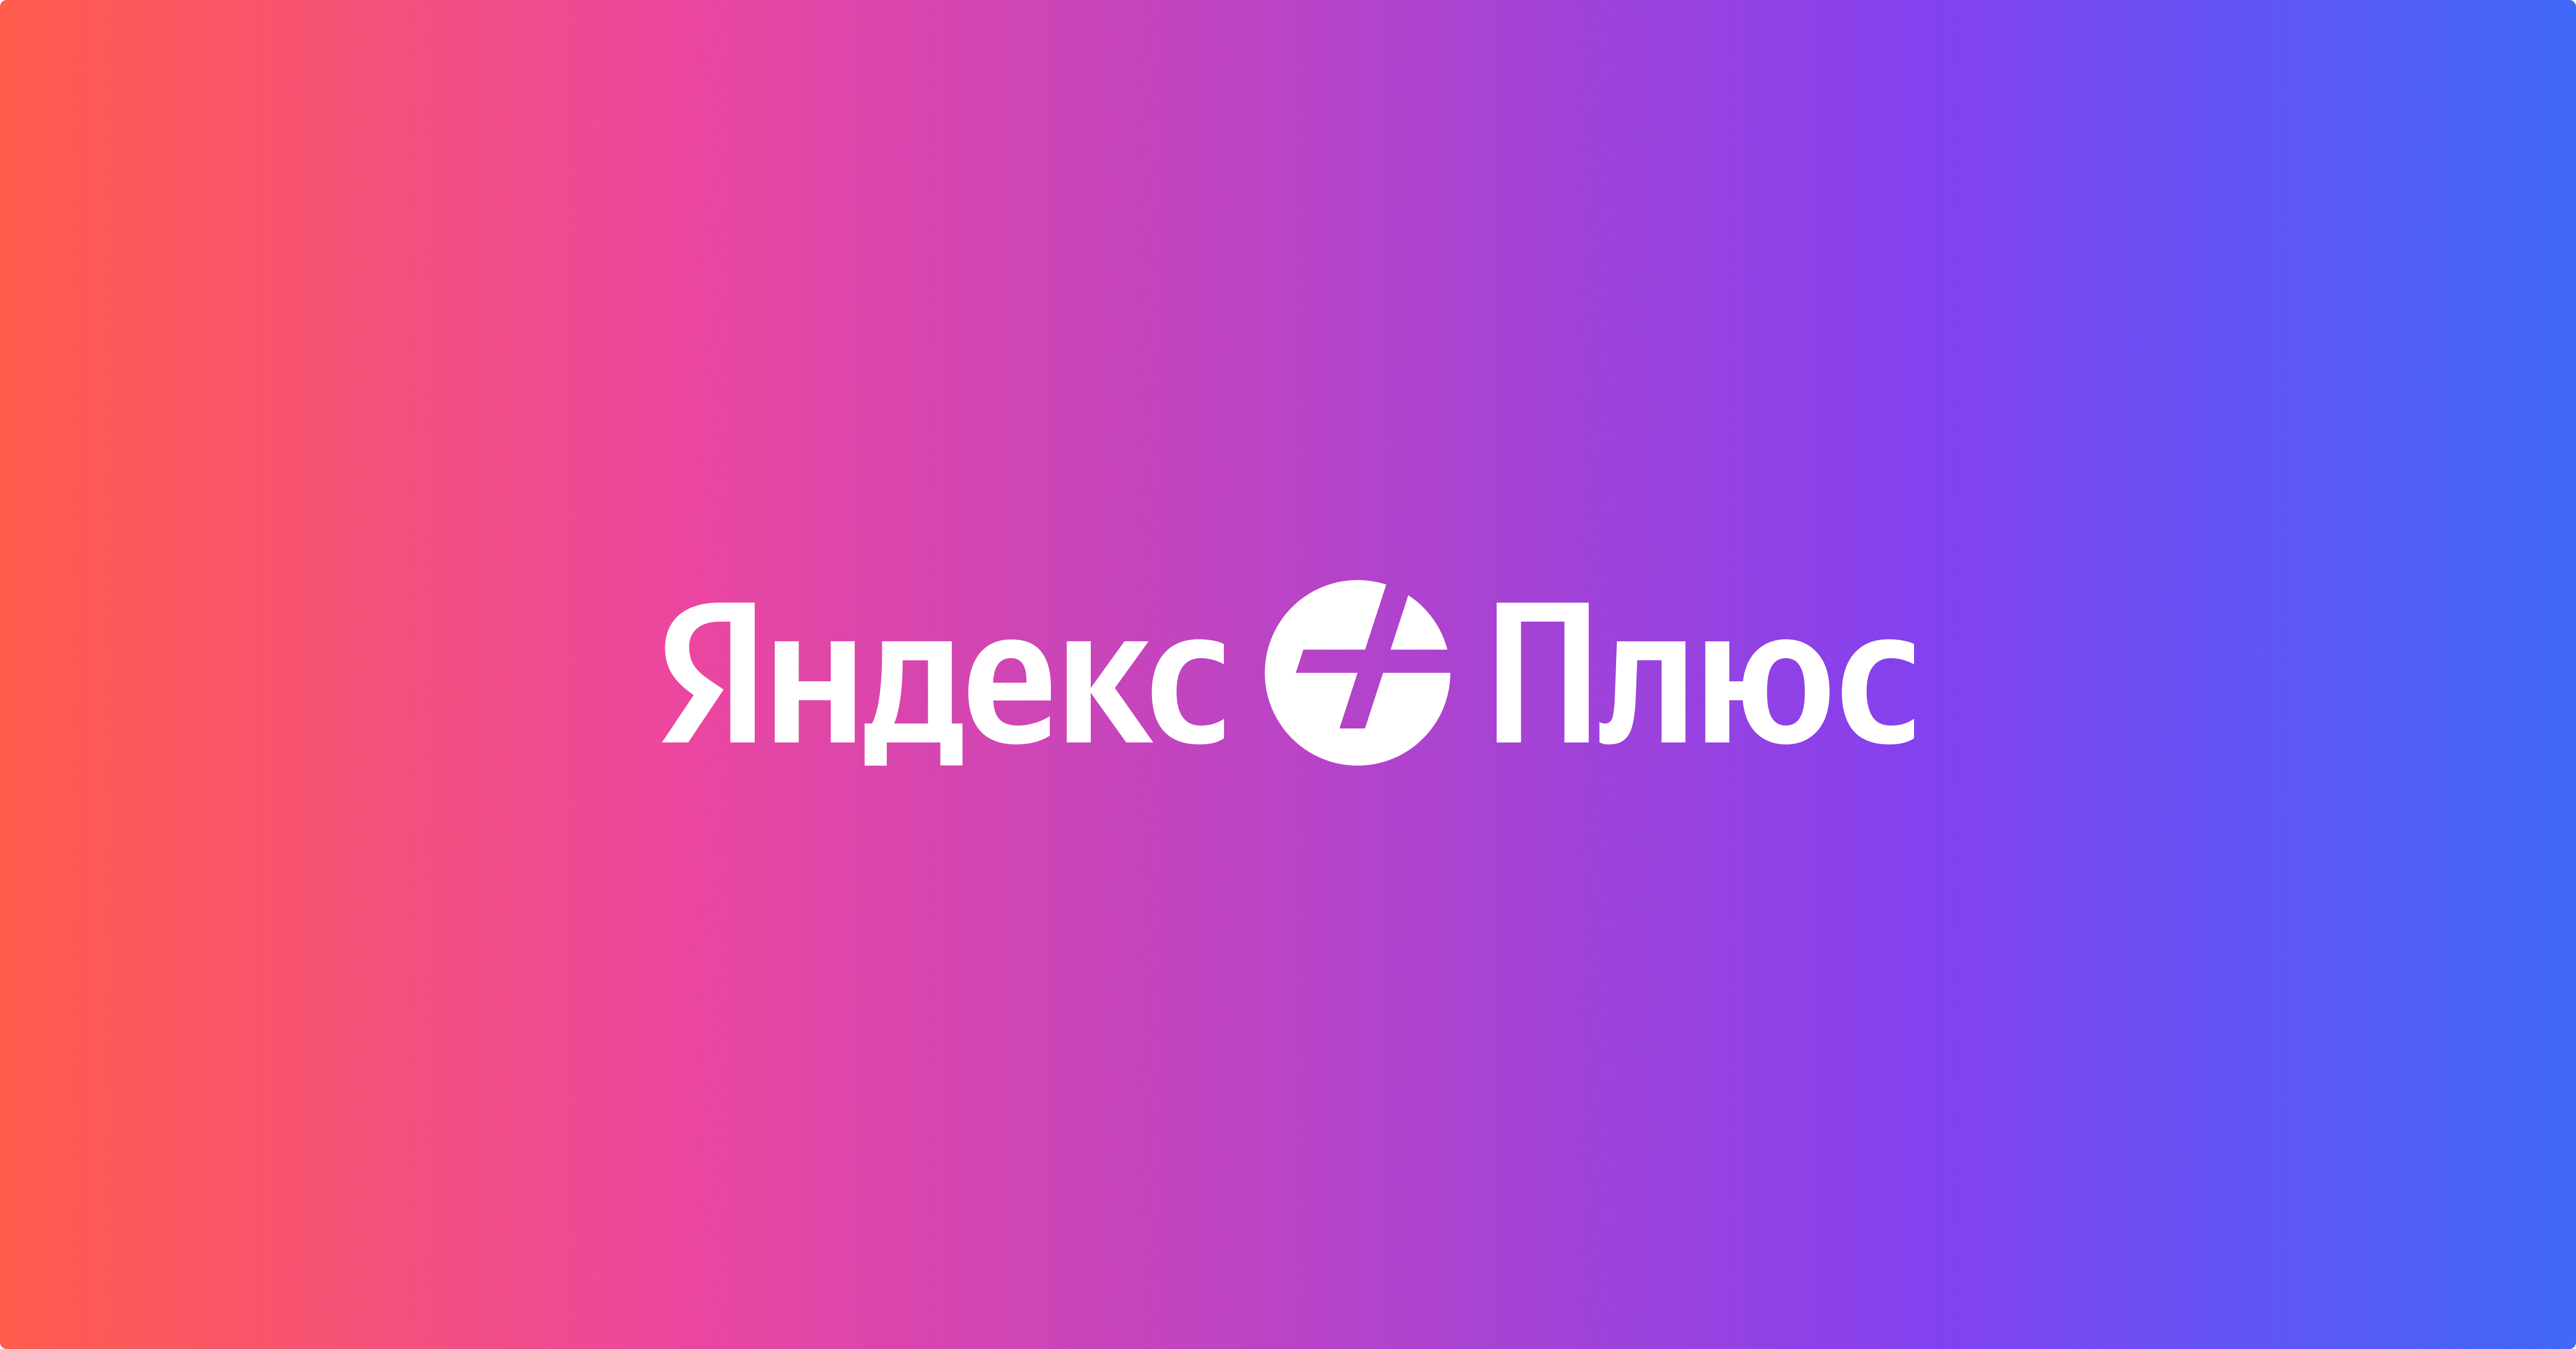 plus.yandex.ru